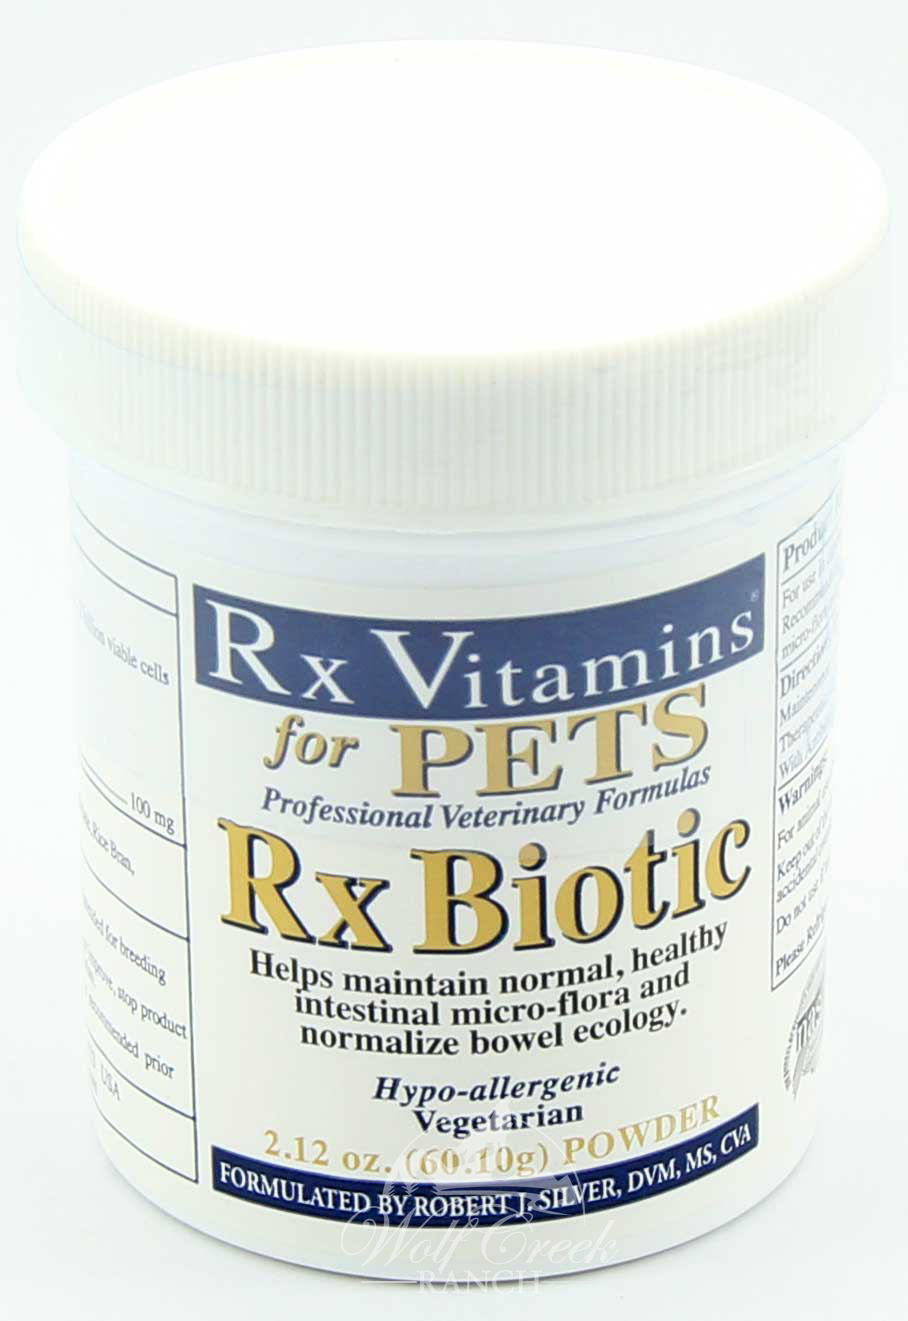 Rx Vitamins for Pets Professional Veterinary Formula RX Biotic